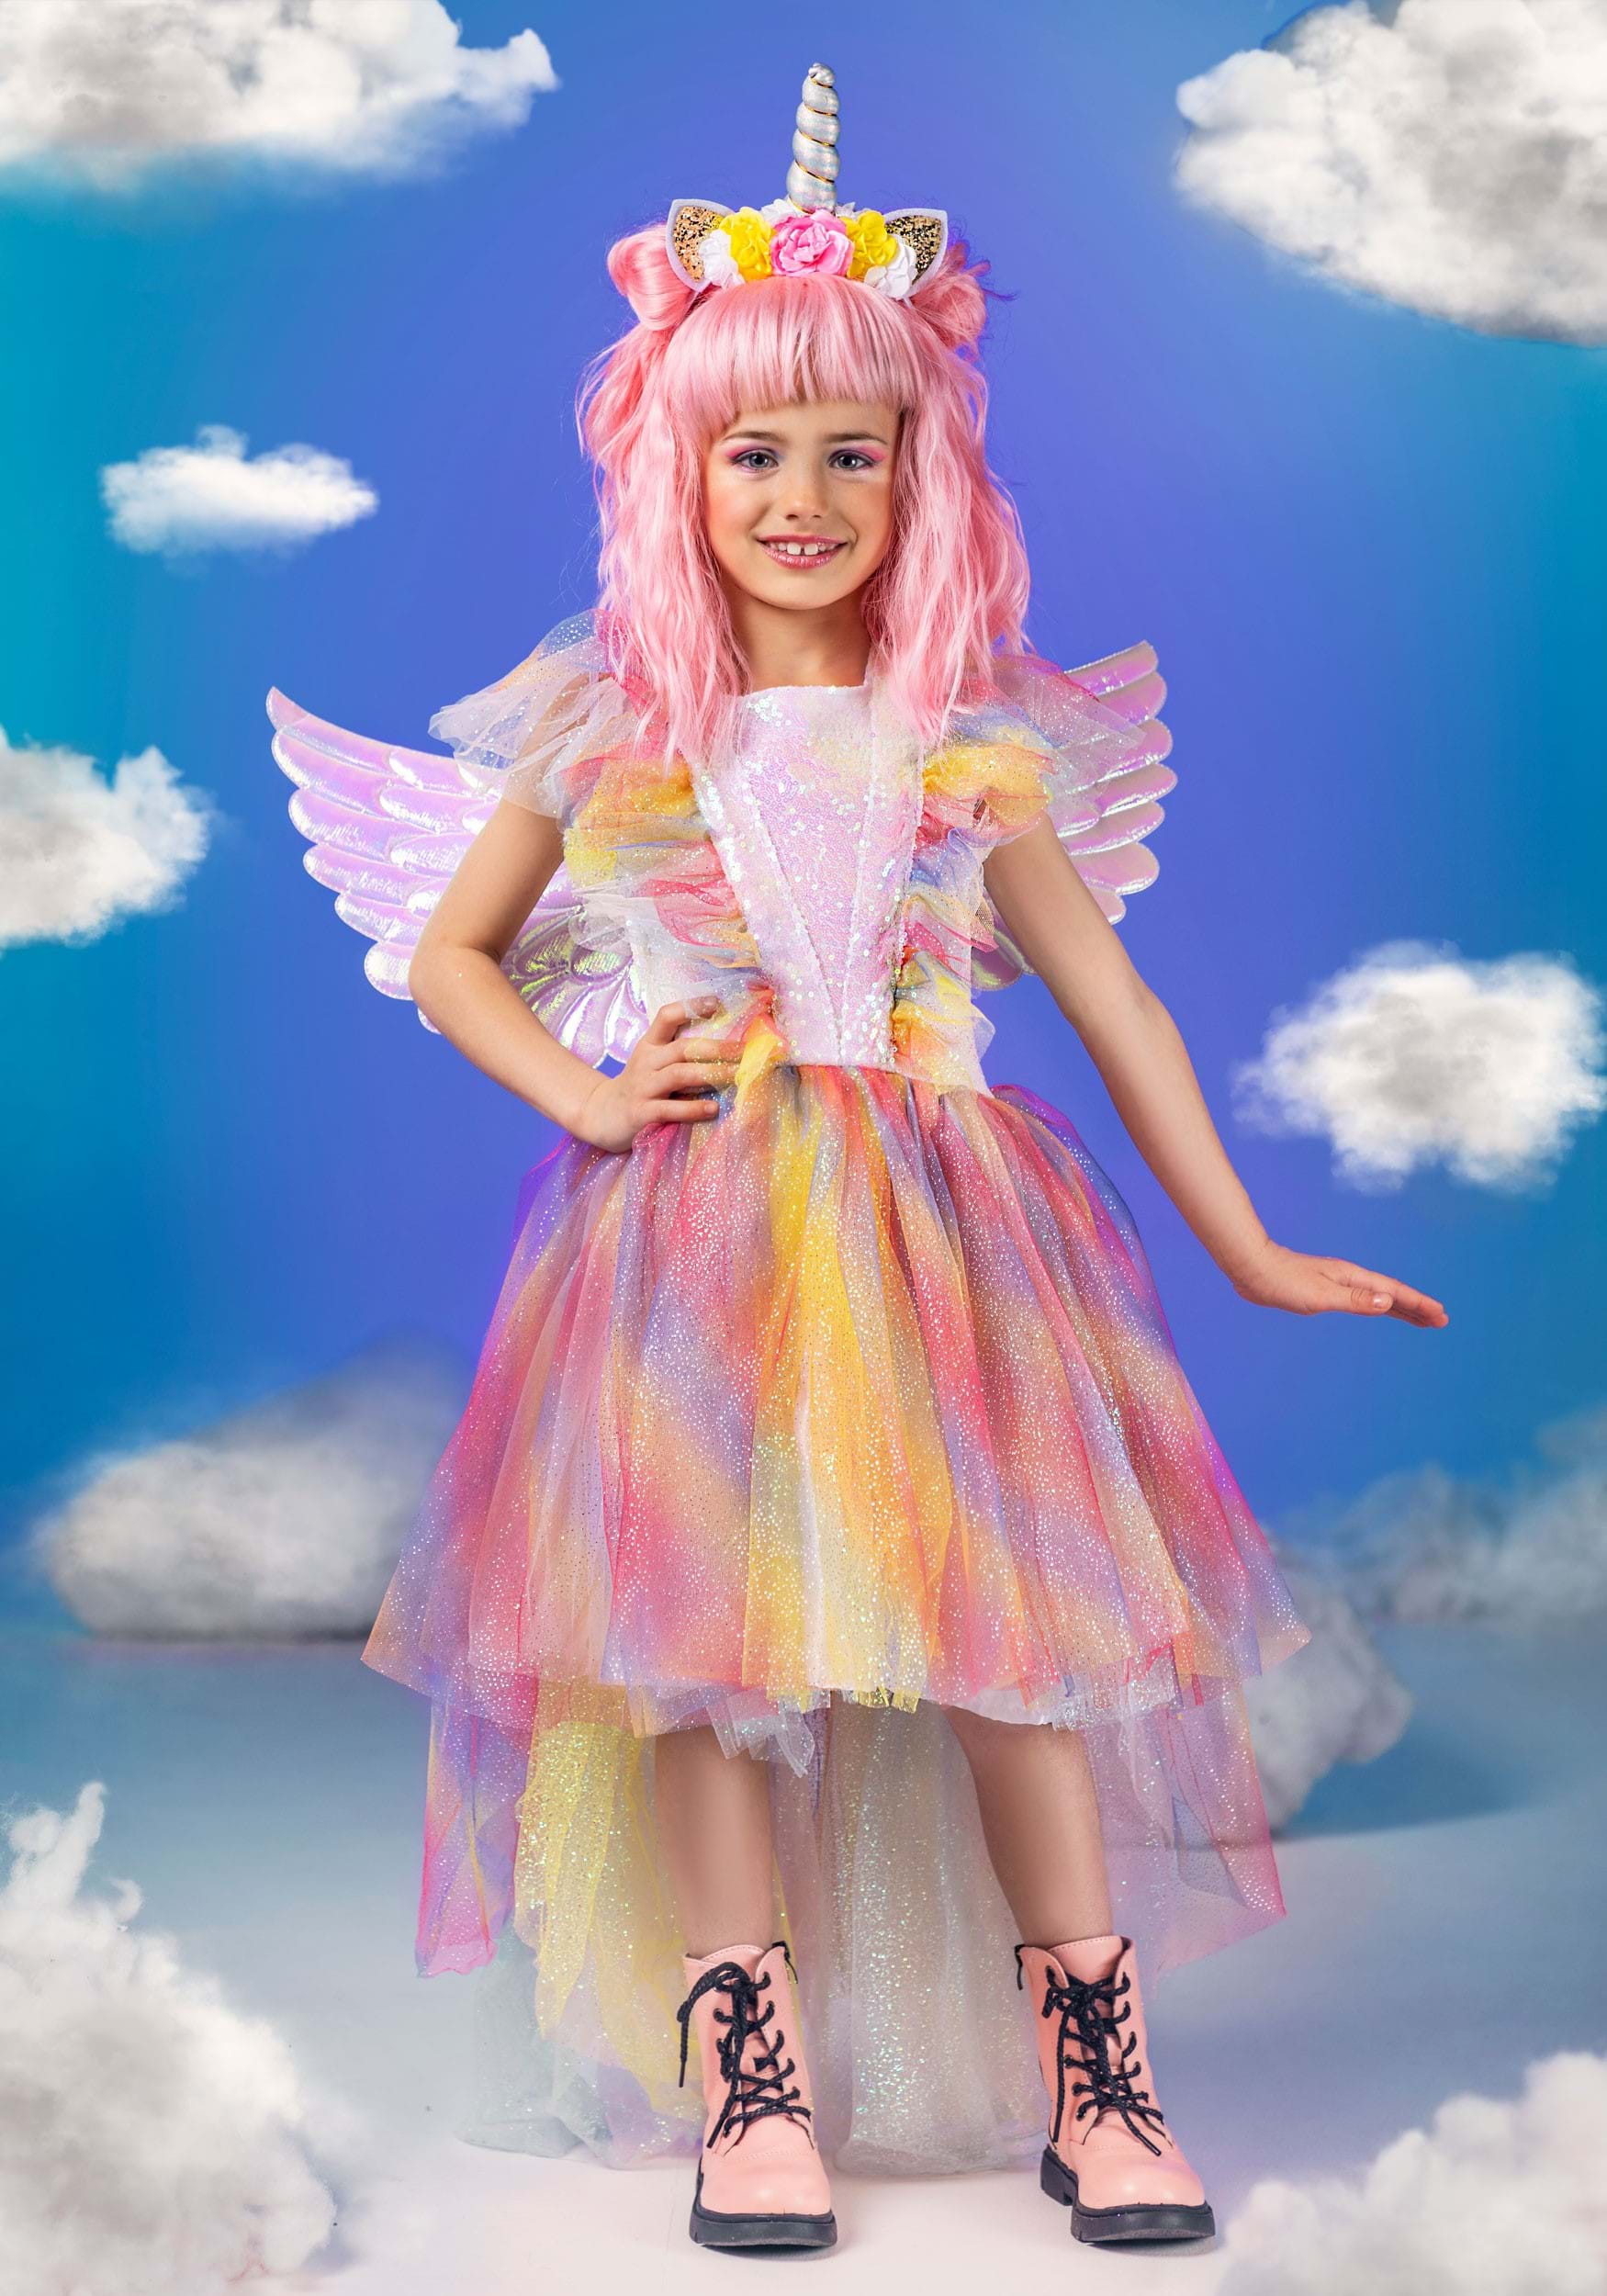 Girl's Deluxe Winged Unicorn Costume